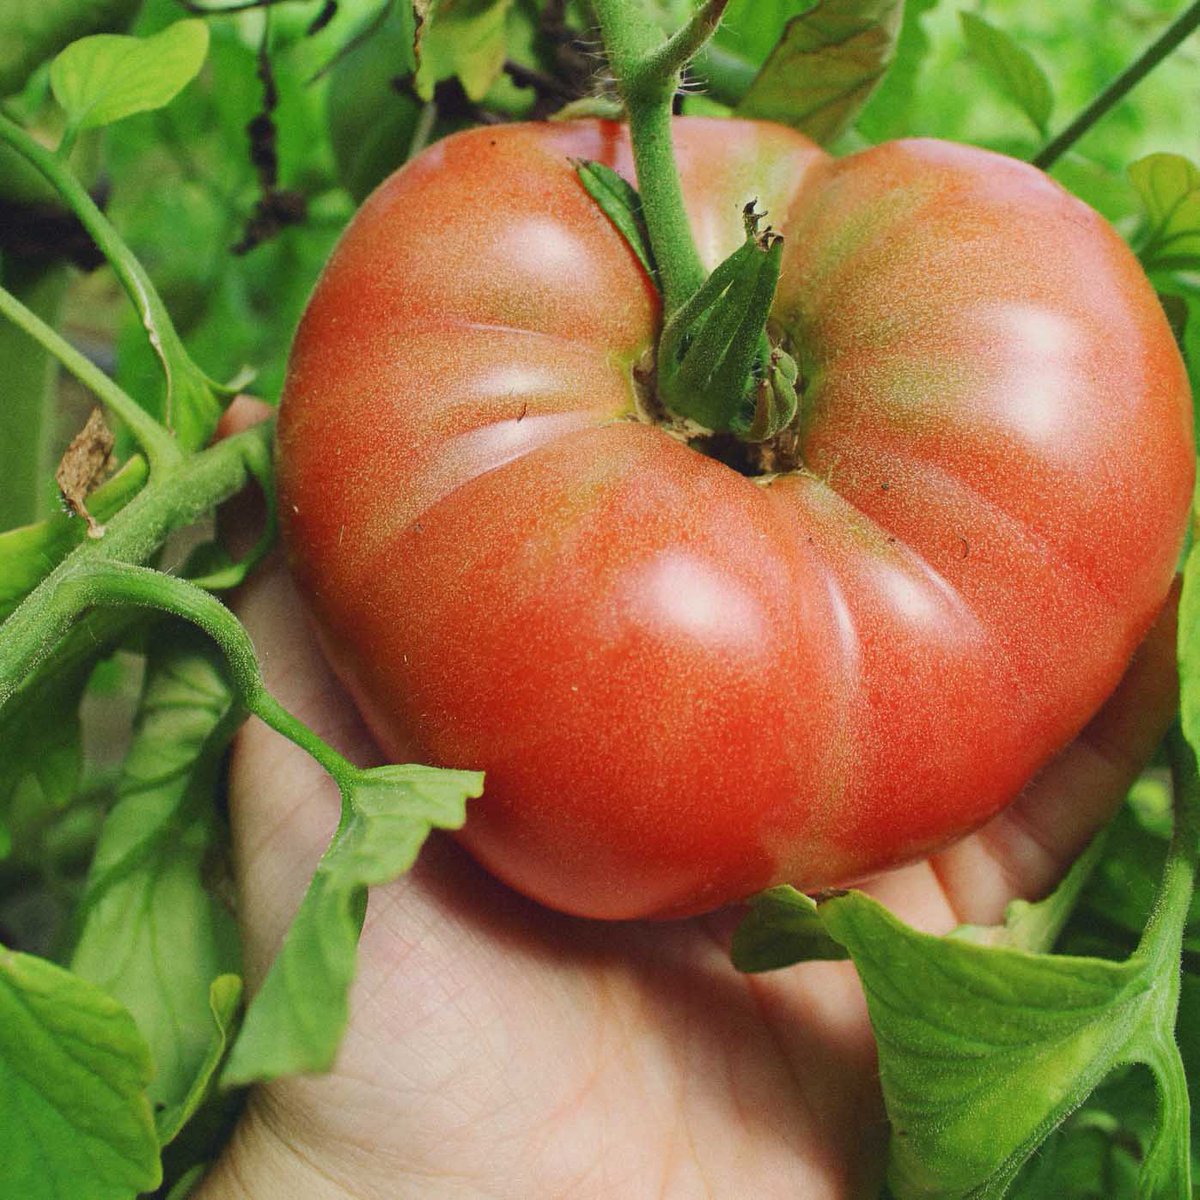 We LOVE seeing these ❤️ #tomayto #tomahto #tomato #heart #itsabuteclarkarealbute #BardwellFarm #season2023 #eatfresh #buylocal #ag #agriculture #aglife #farmlife